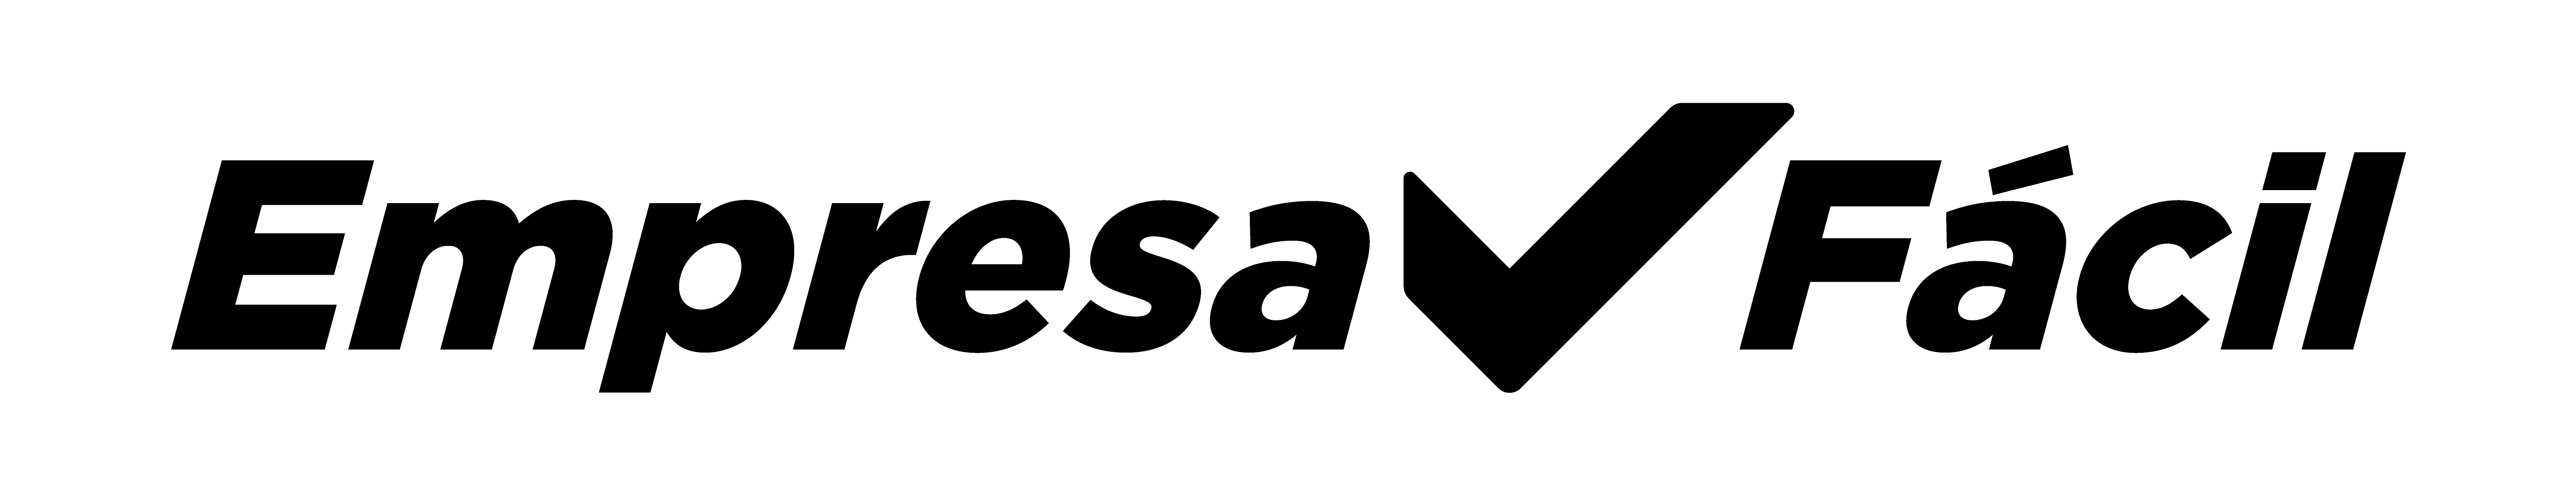 Logo Empresa Fácil 1 cor (PNG, 60KB)